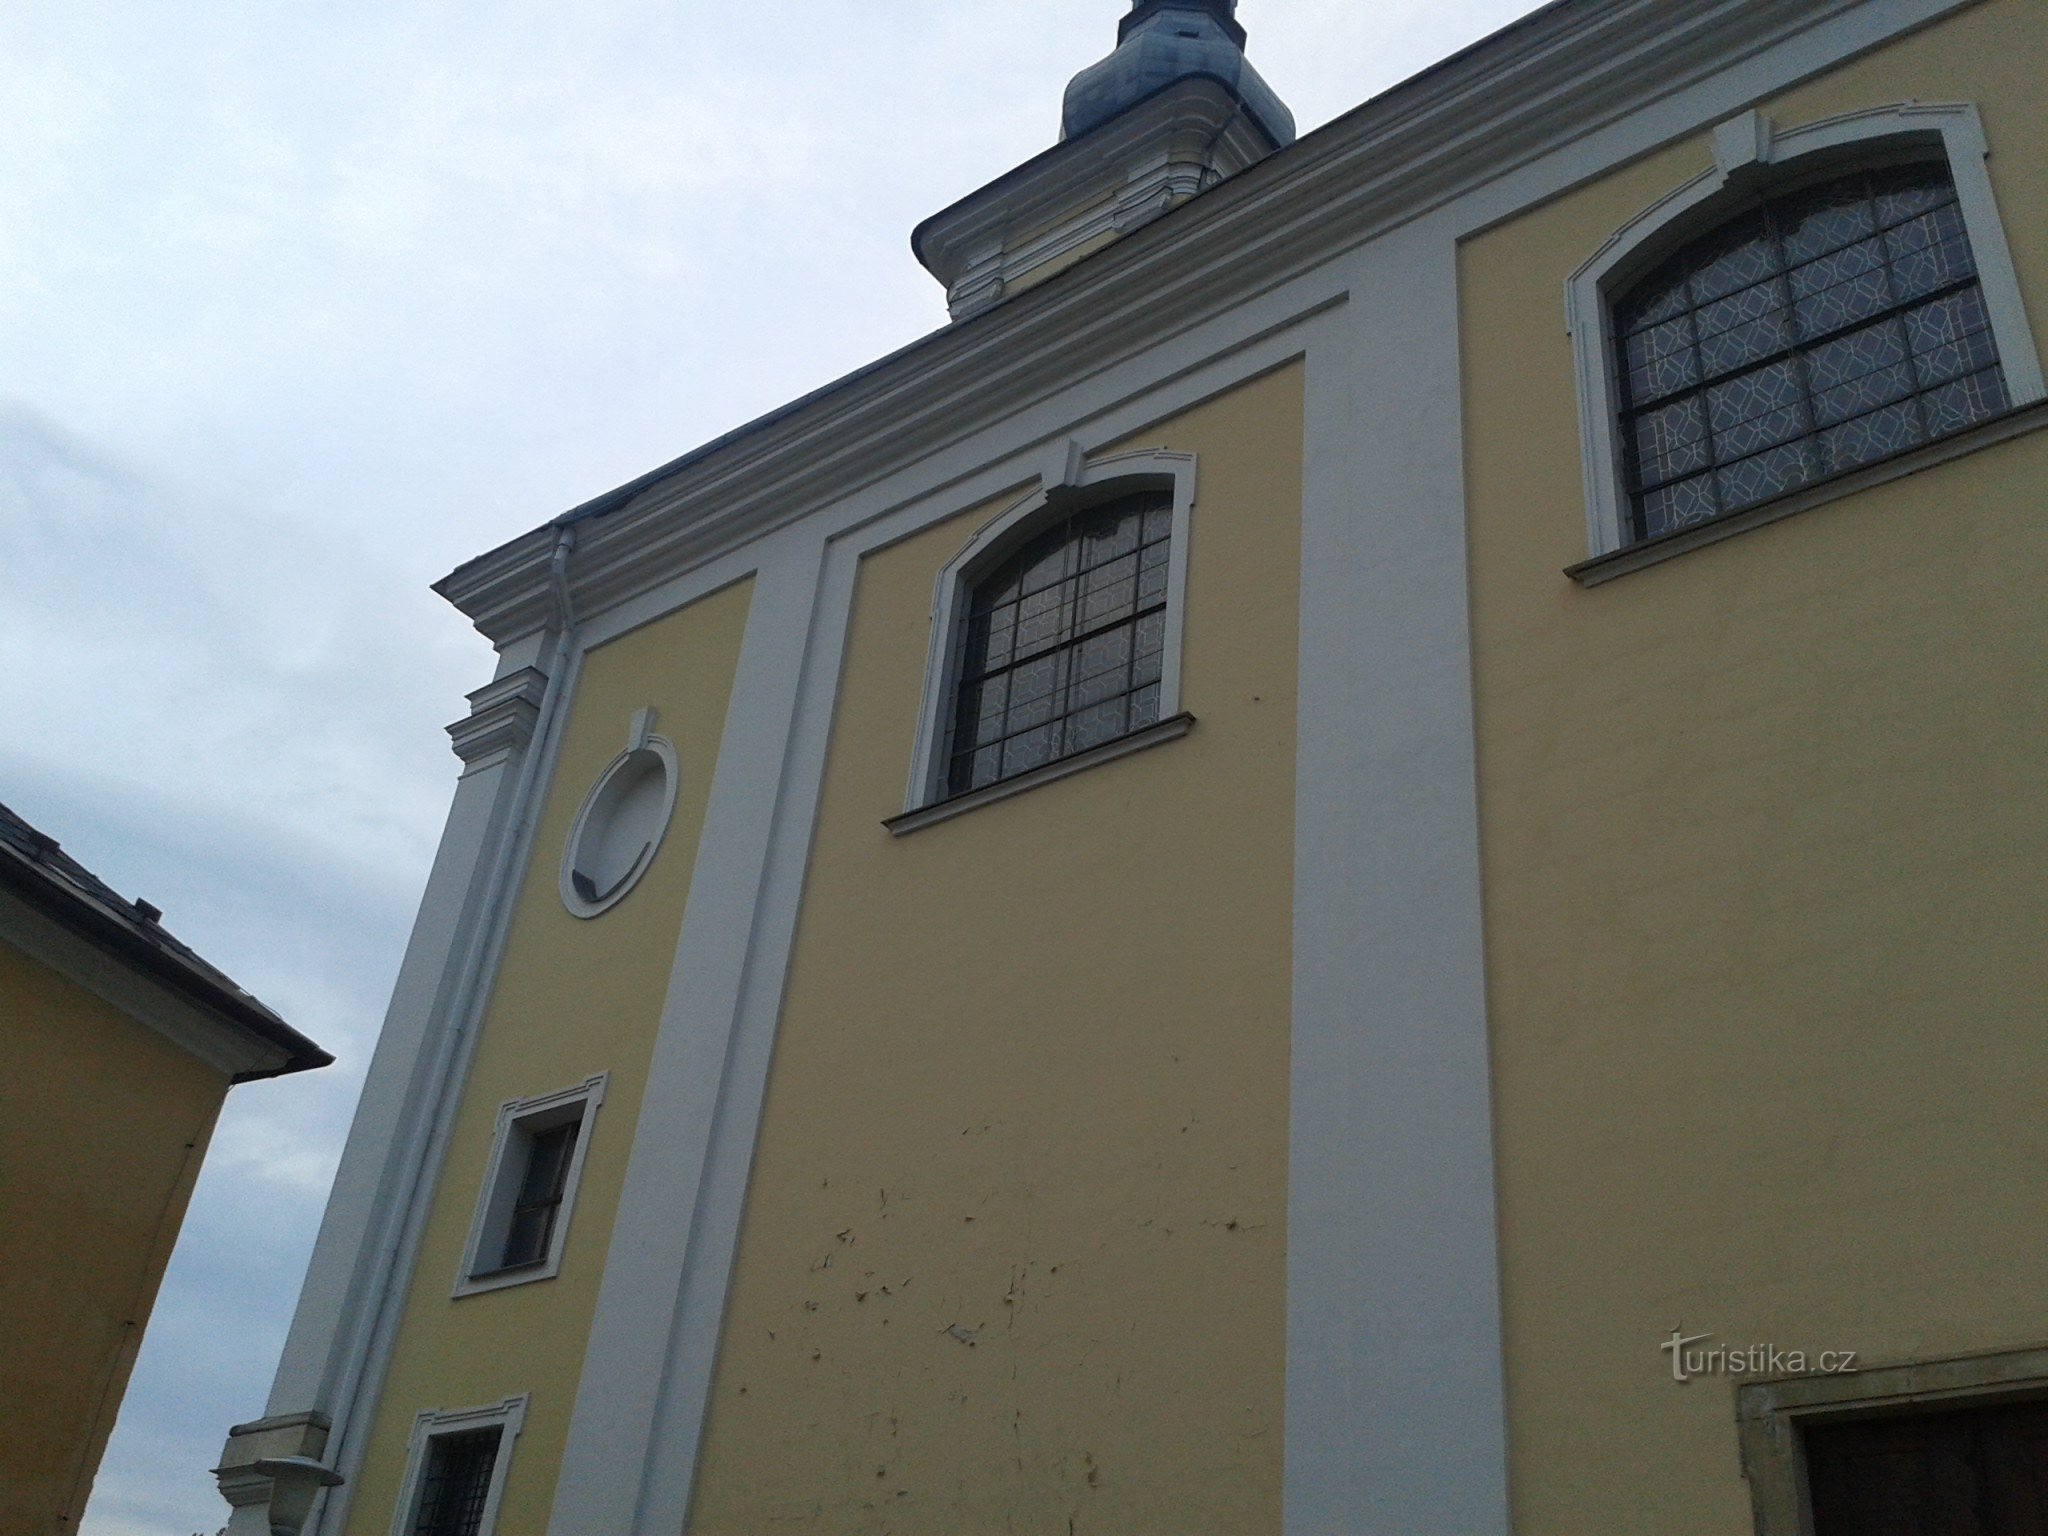 Zábřeh (na Mor.) - Biserica Sf. Bartolomeu din exterior și din interior (adăugare 19.3.16) + parohie